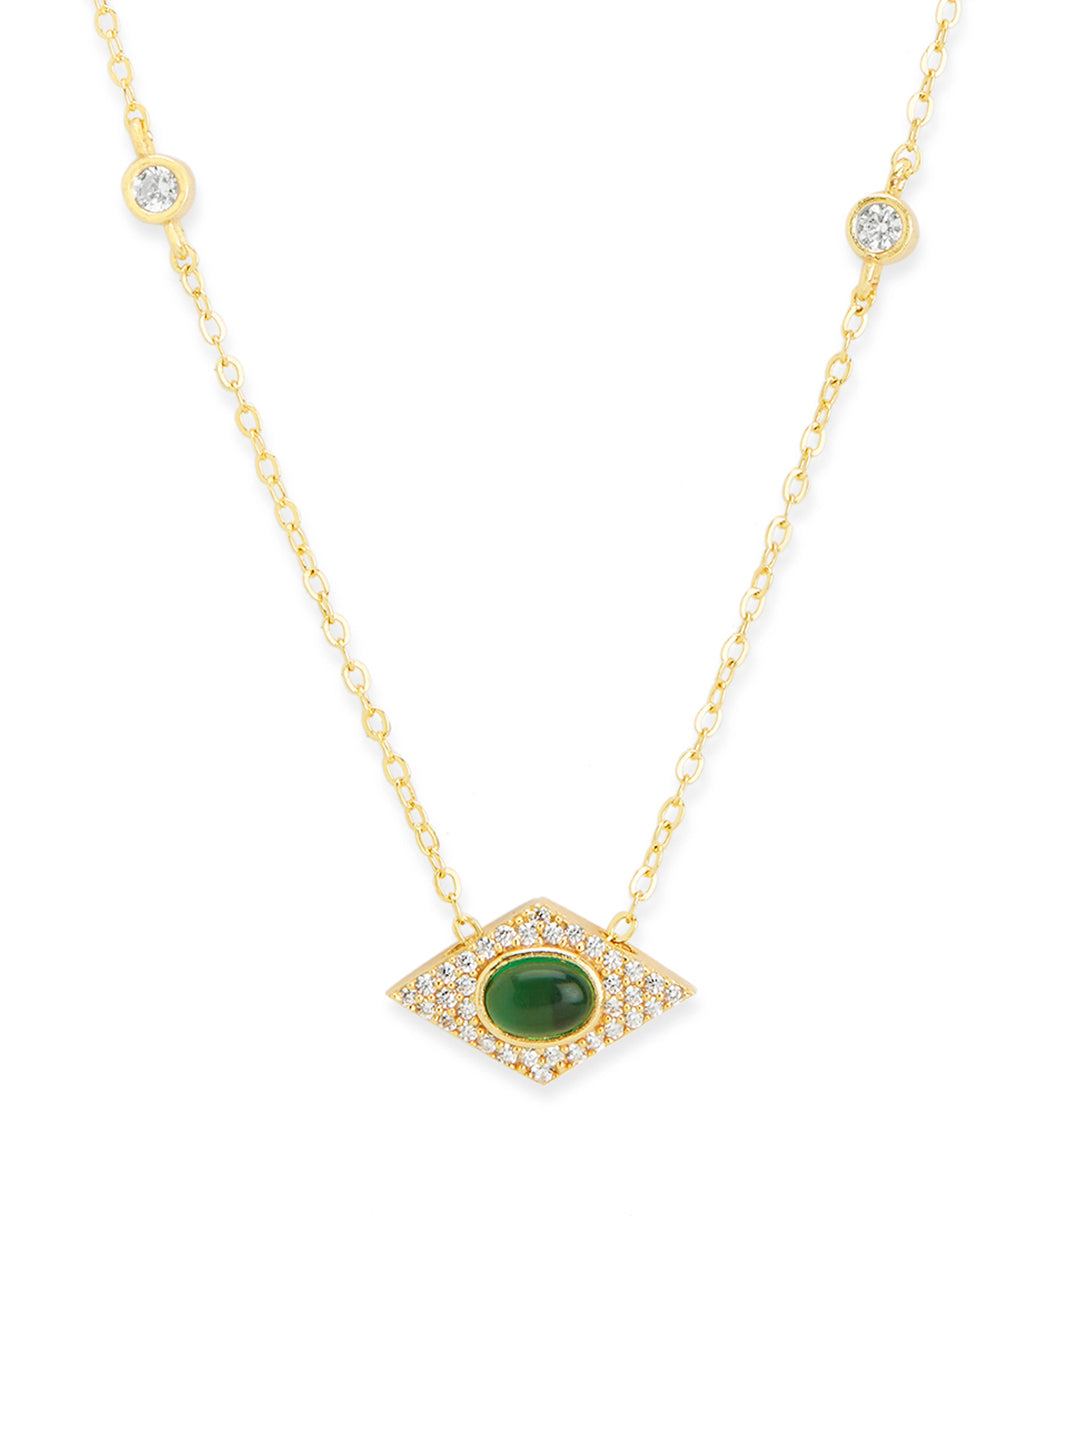 Green Cabachon Pendant Necklace